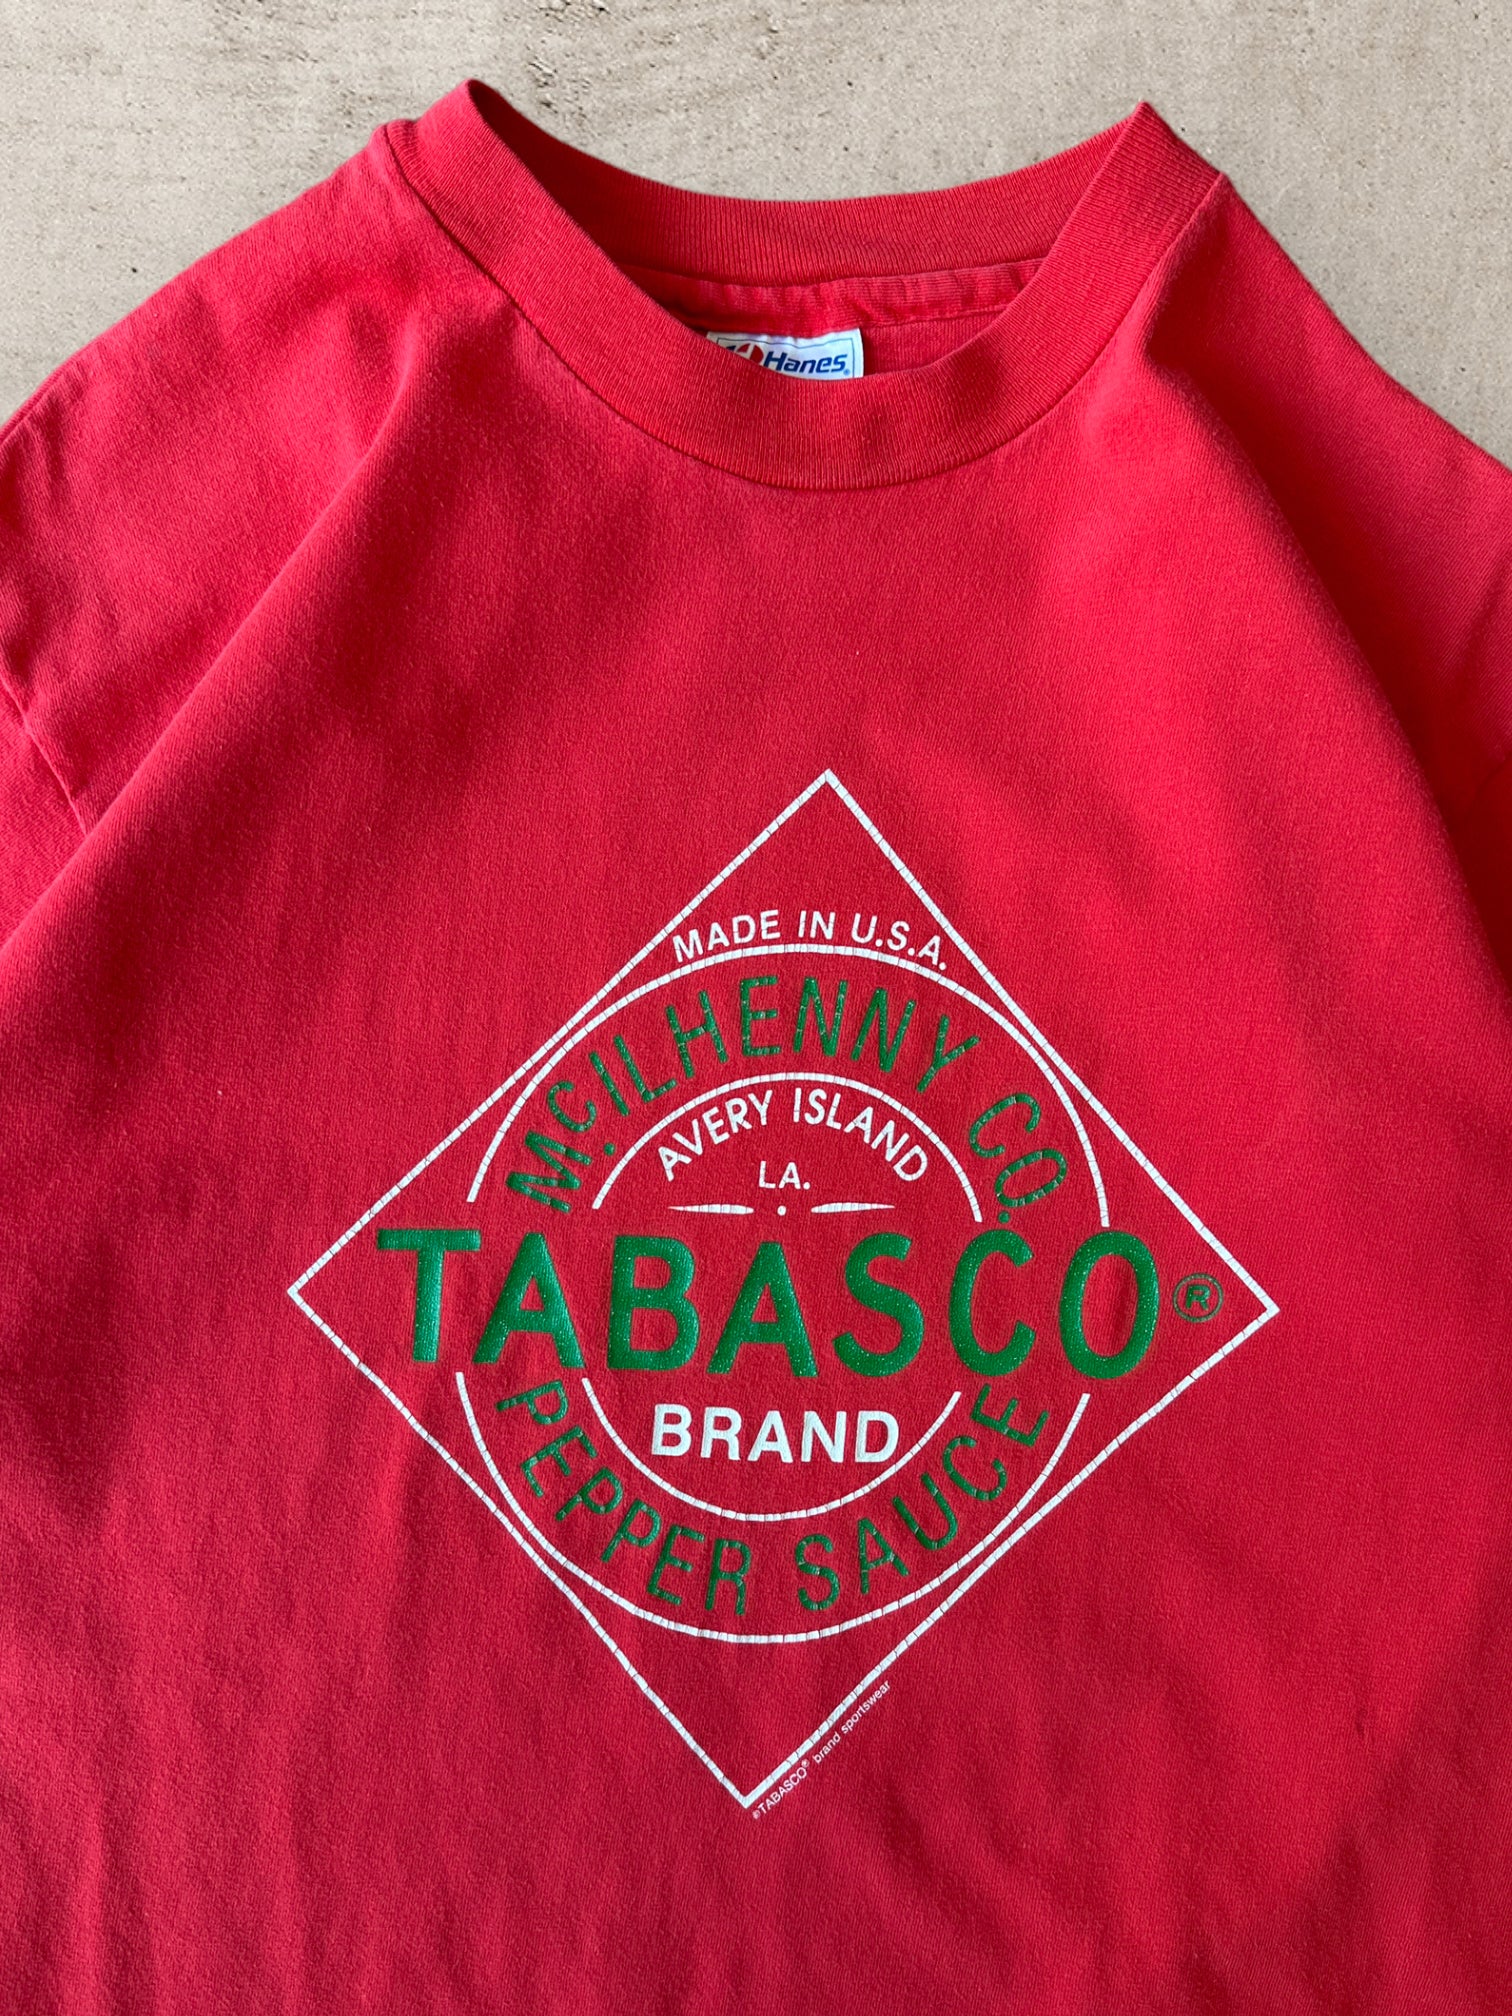 90s Tabasco Sauce Graphic T-Shirt - Large